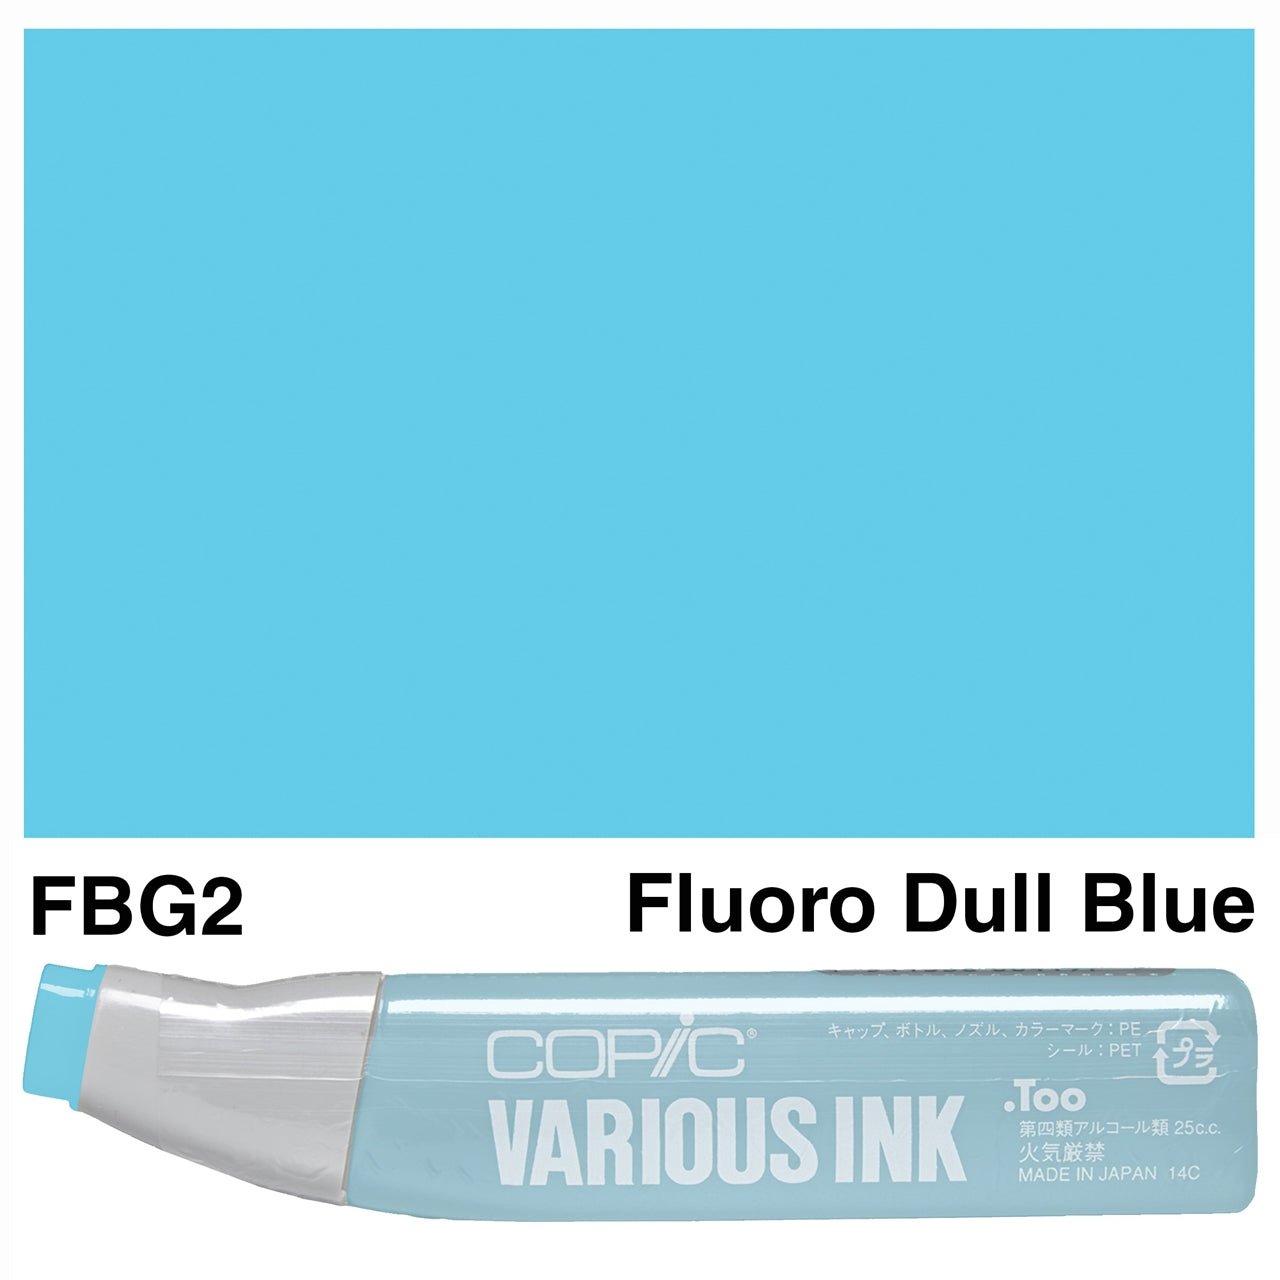 Copic Various Ink FBG2 Fluorescent Dull Blue Green - theartshop.com.au